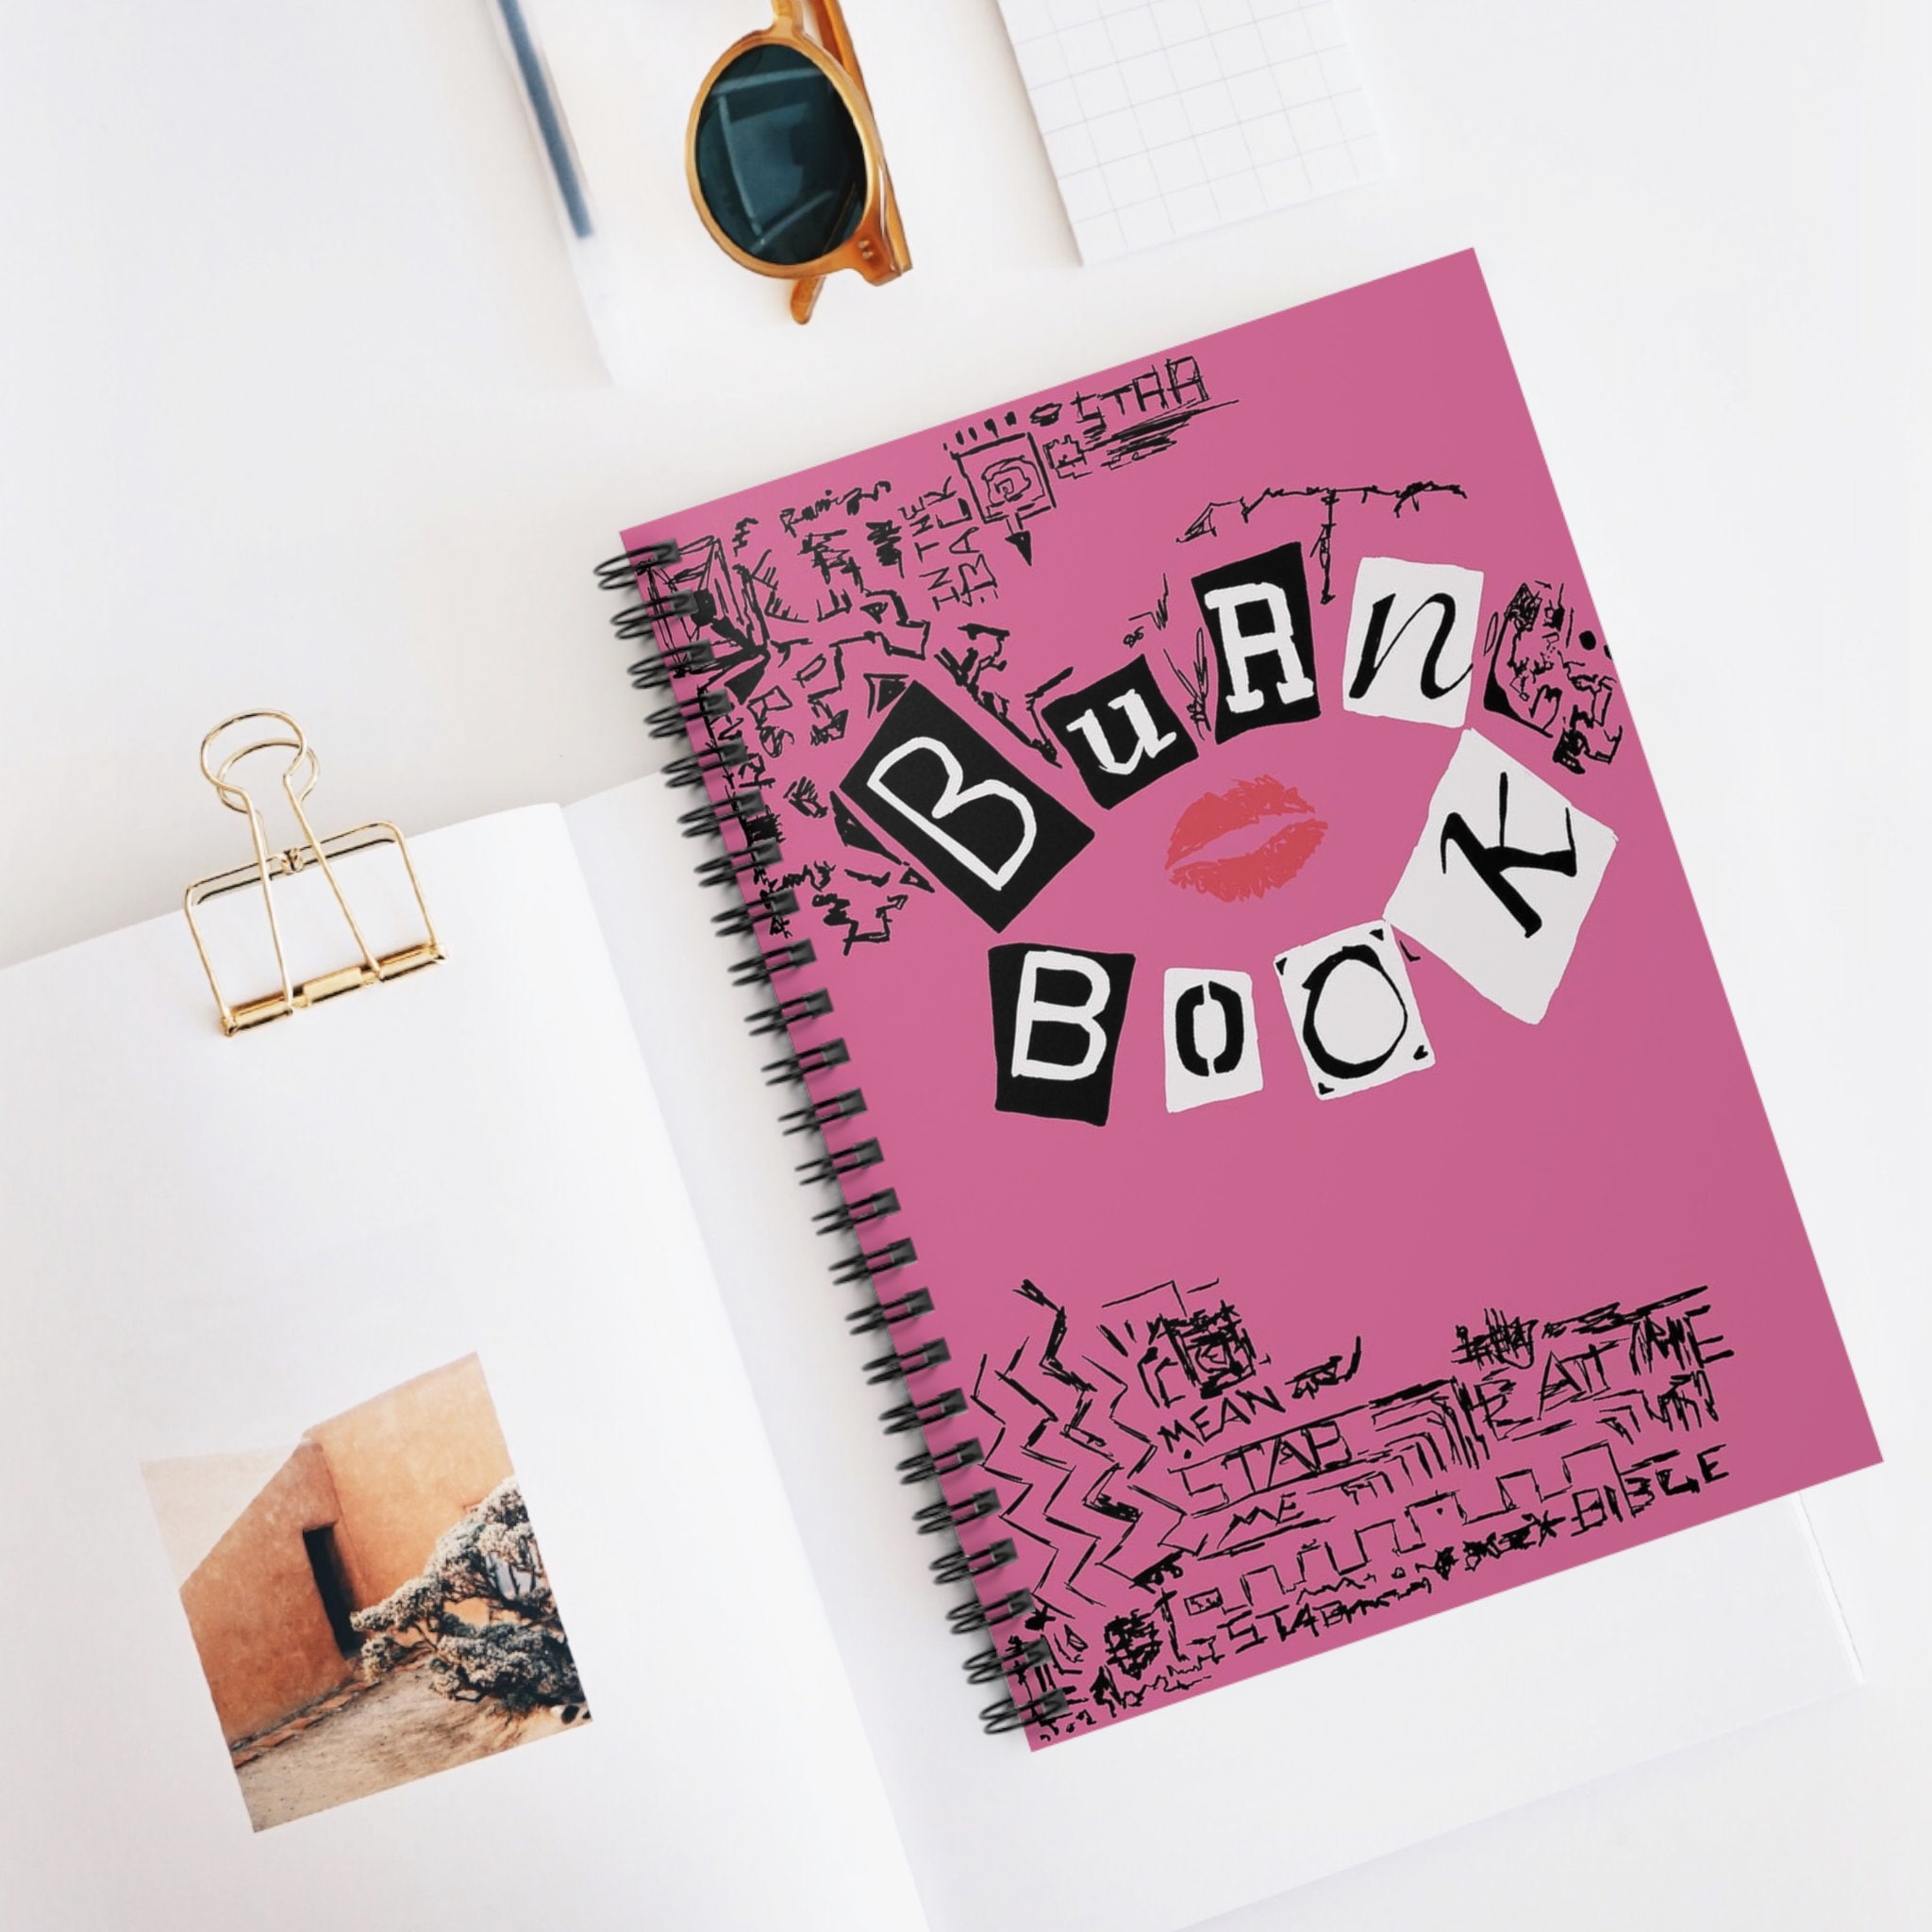 Sketch Book Journal - Mean Girls Inspired *Burn Book*